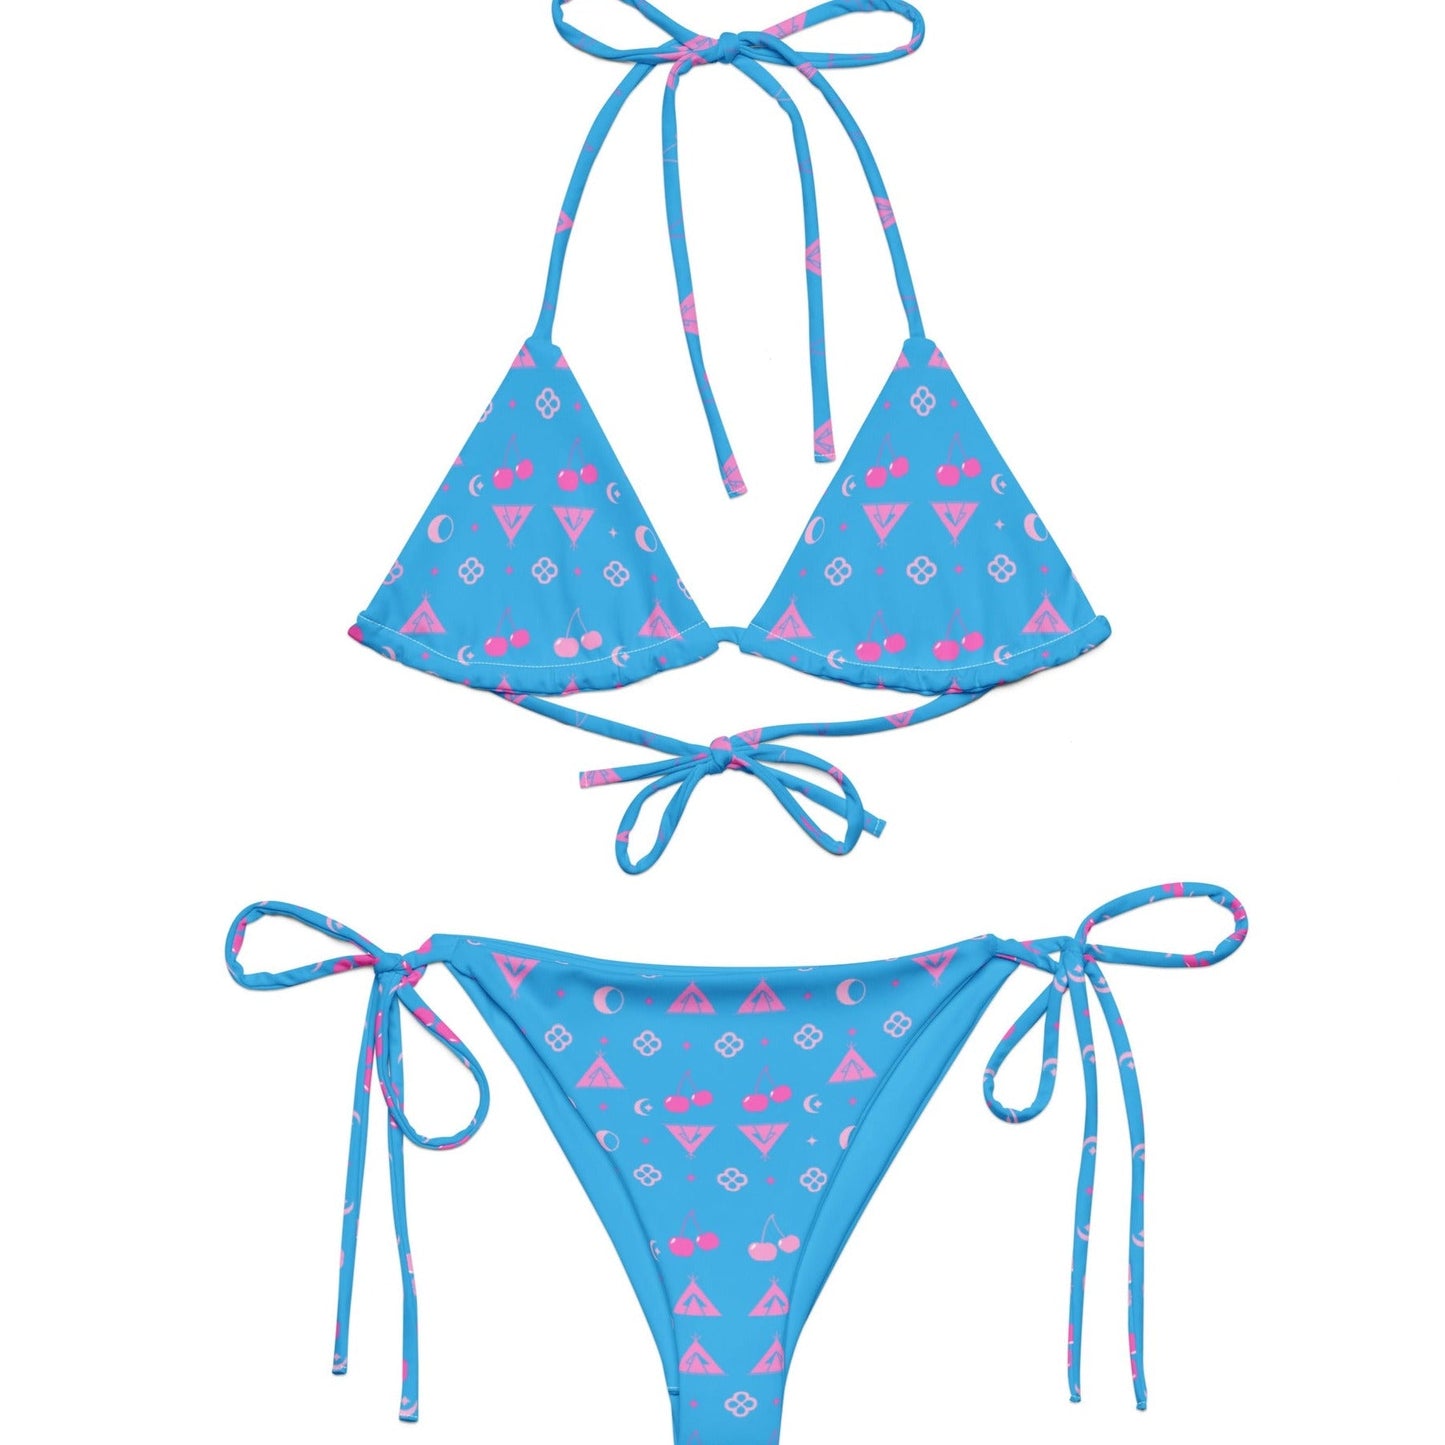 Boujee Native Cherry print recycled string bikini Indigenous - Nikikw Designs